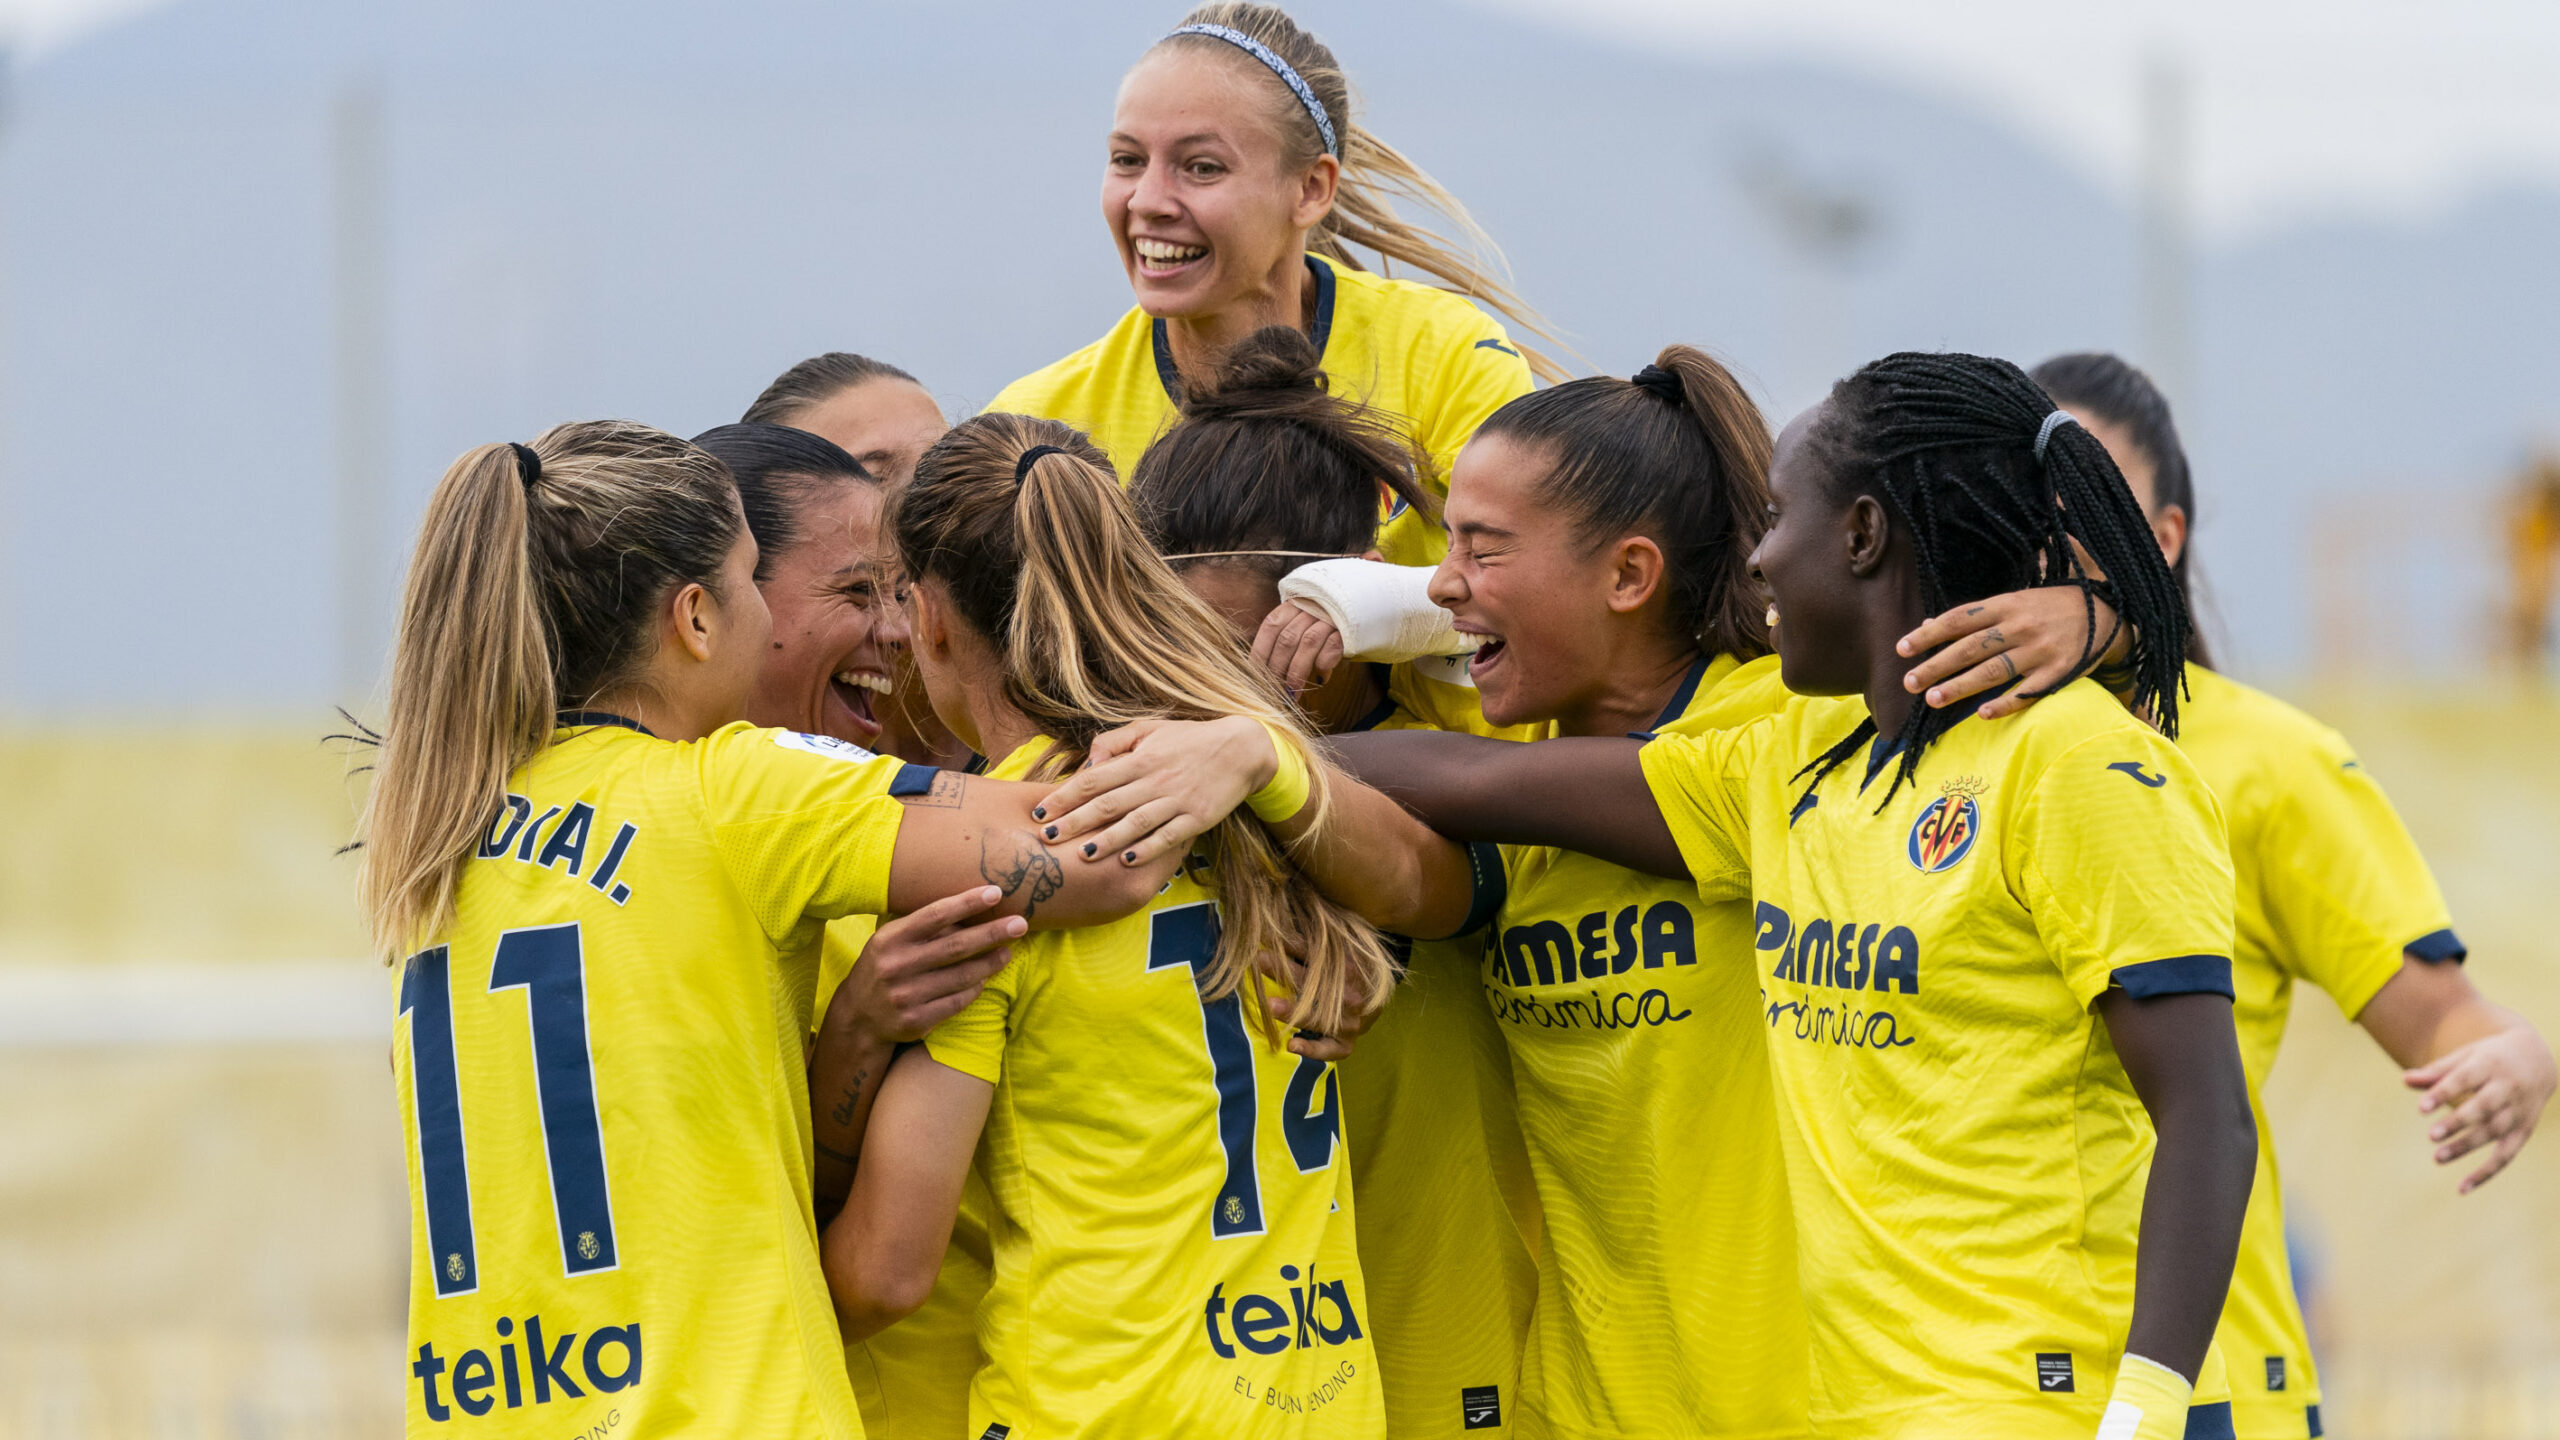 Francisca Lara marca un golazo y le da el primer triunfo del año a Villarreal